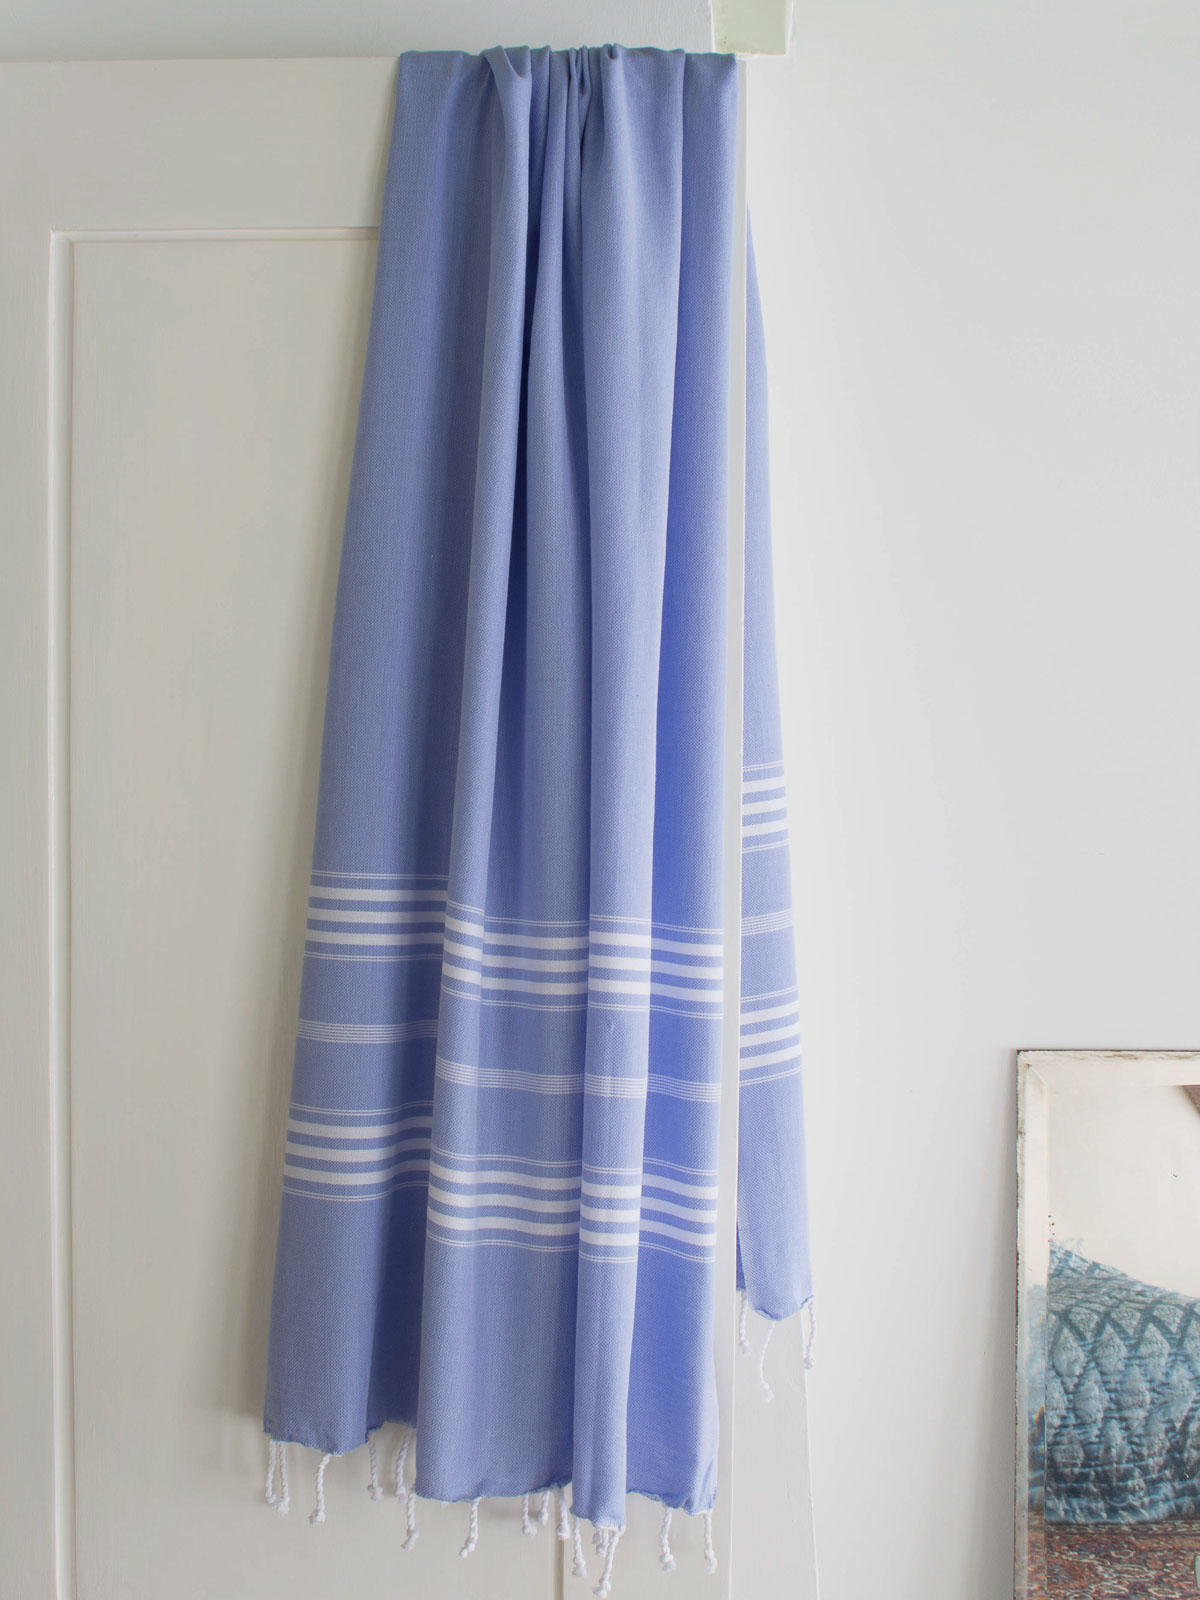 hammam towel lavender blue